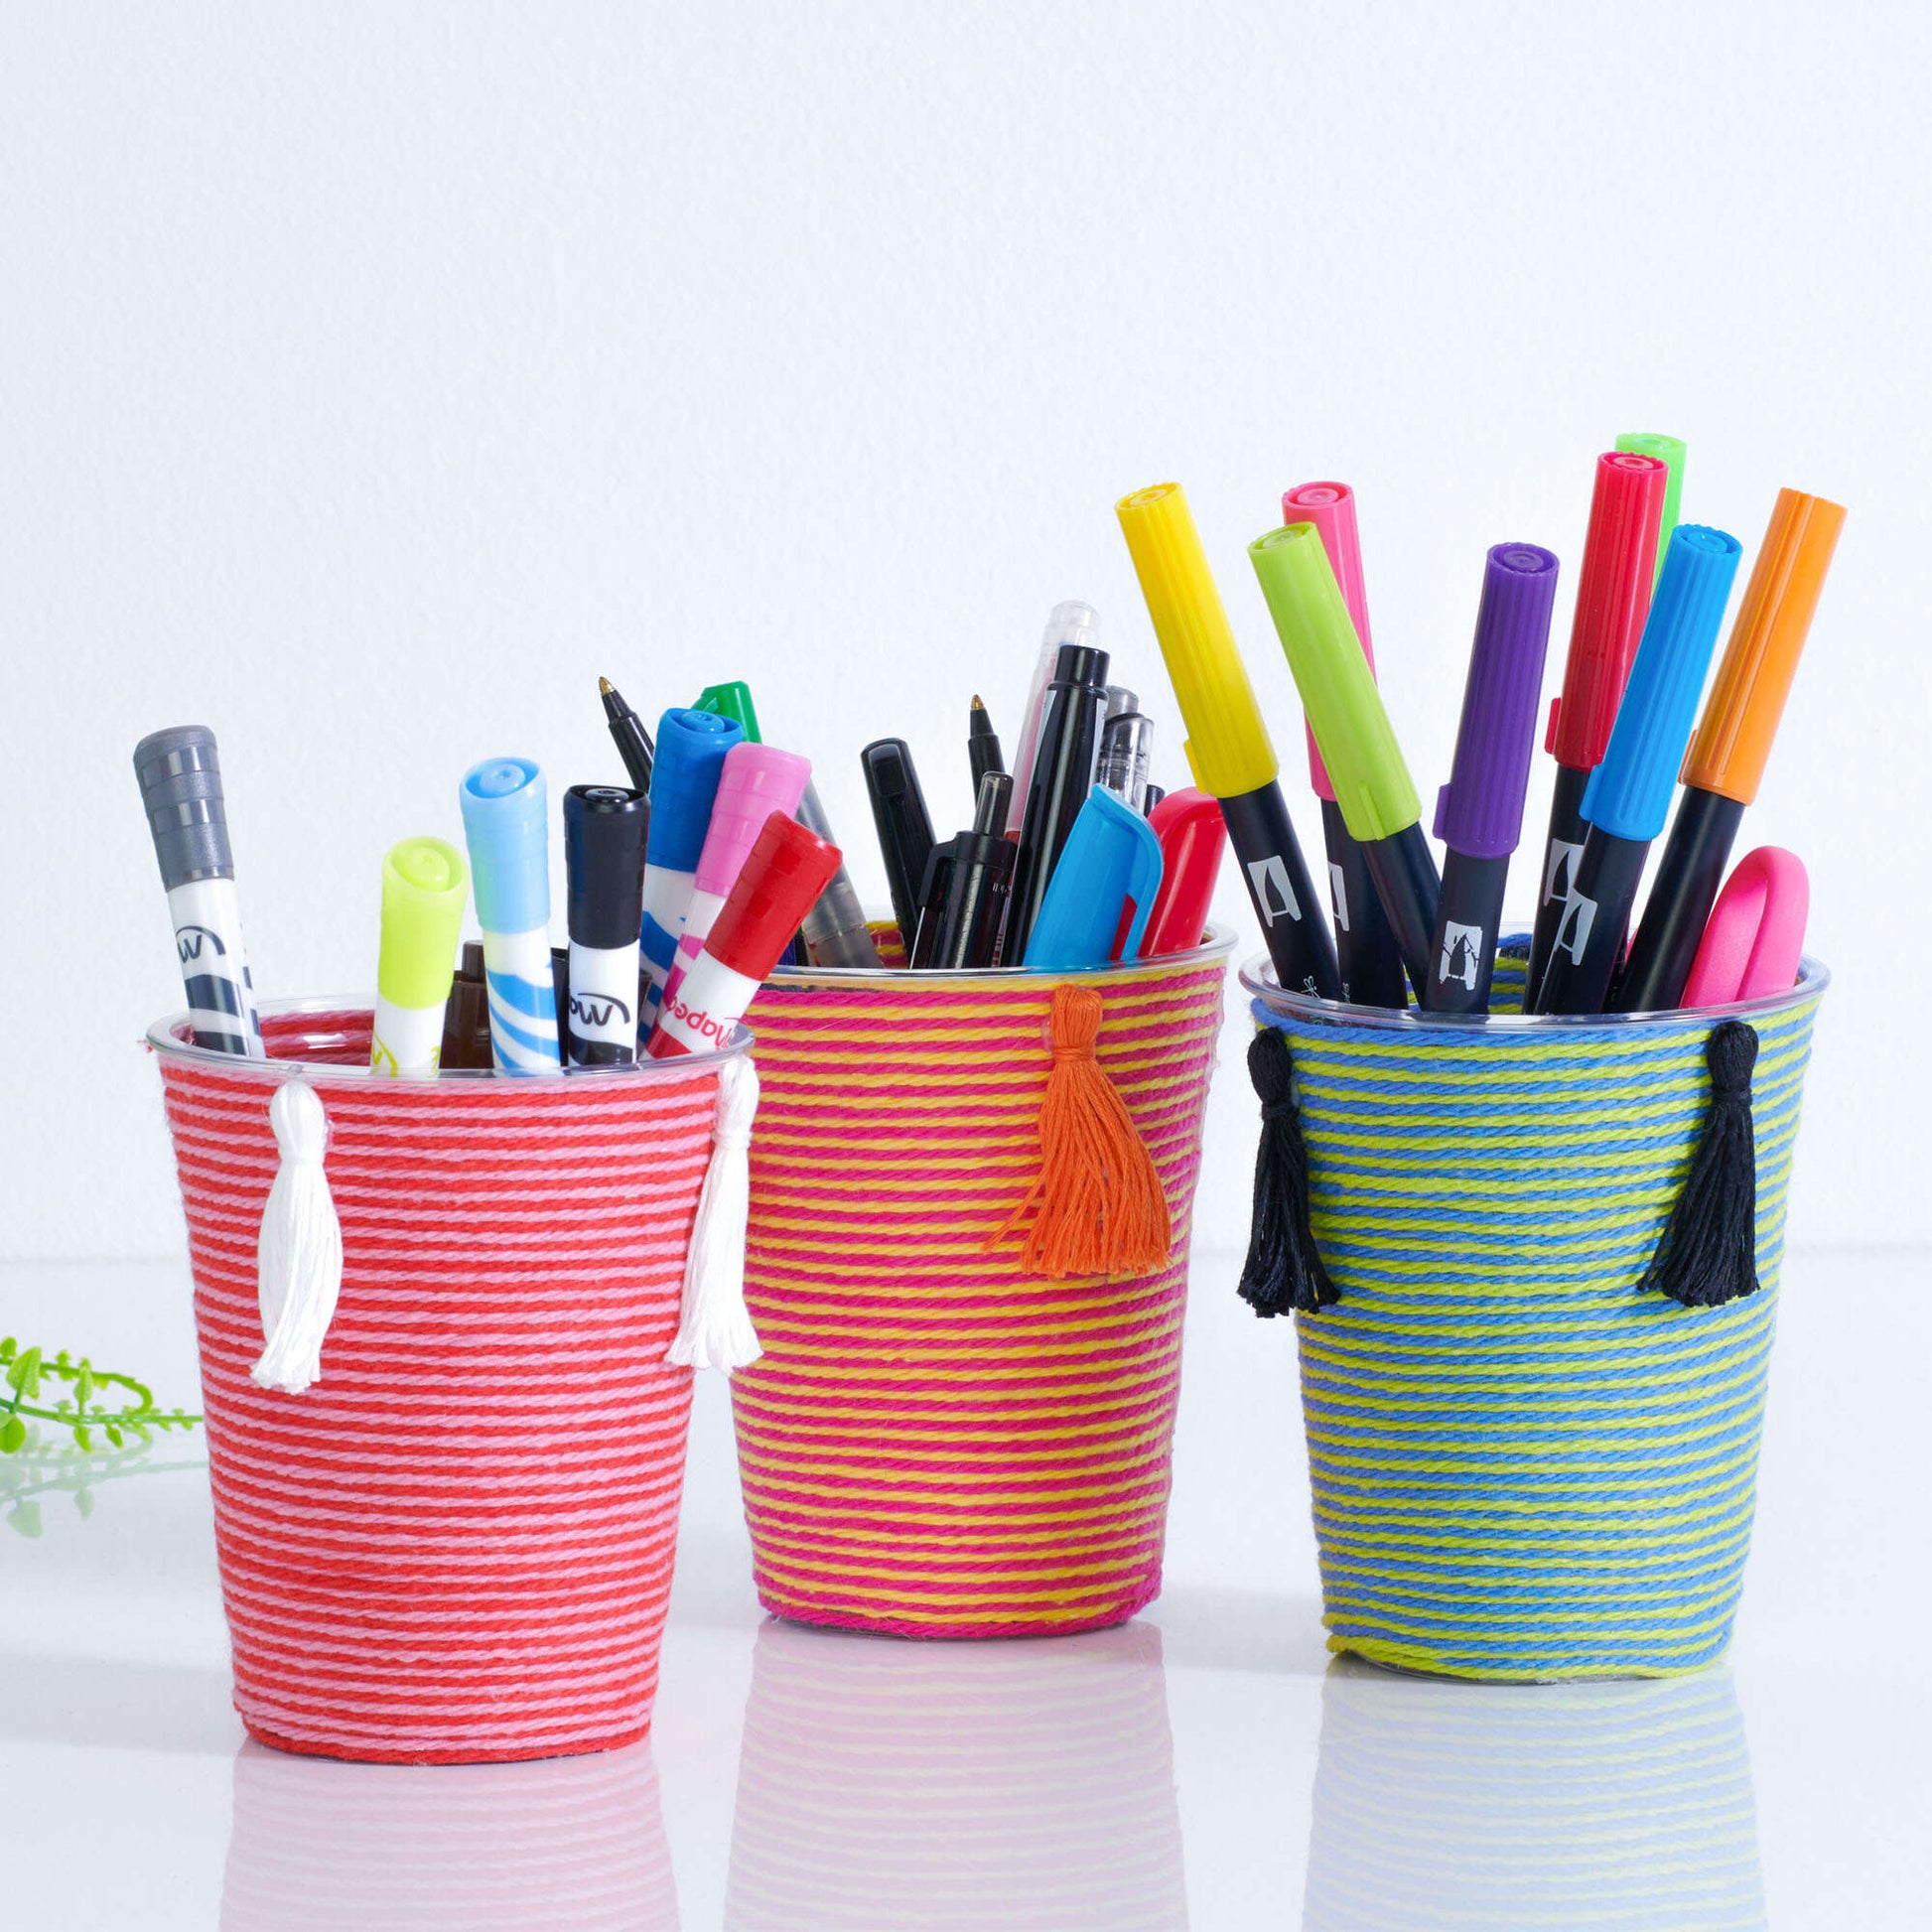 Free Lily Tasseled Pencil Holders Craft Pattern